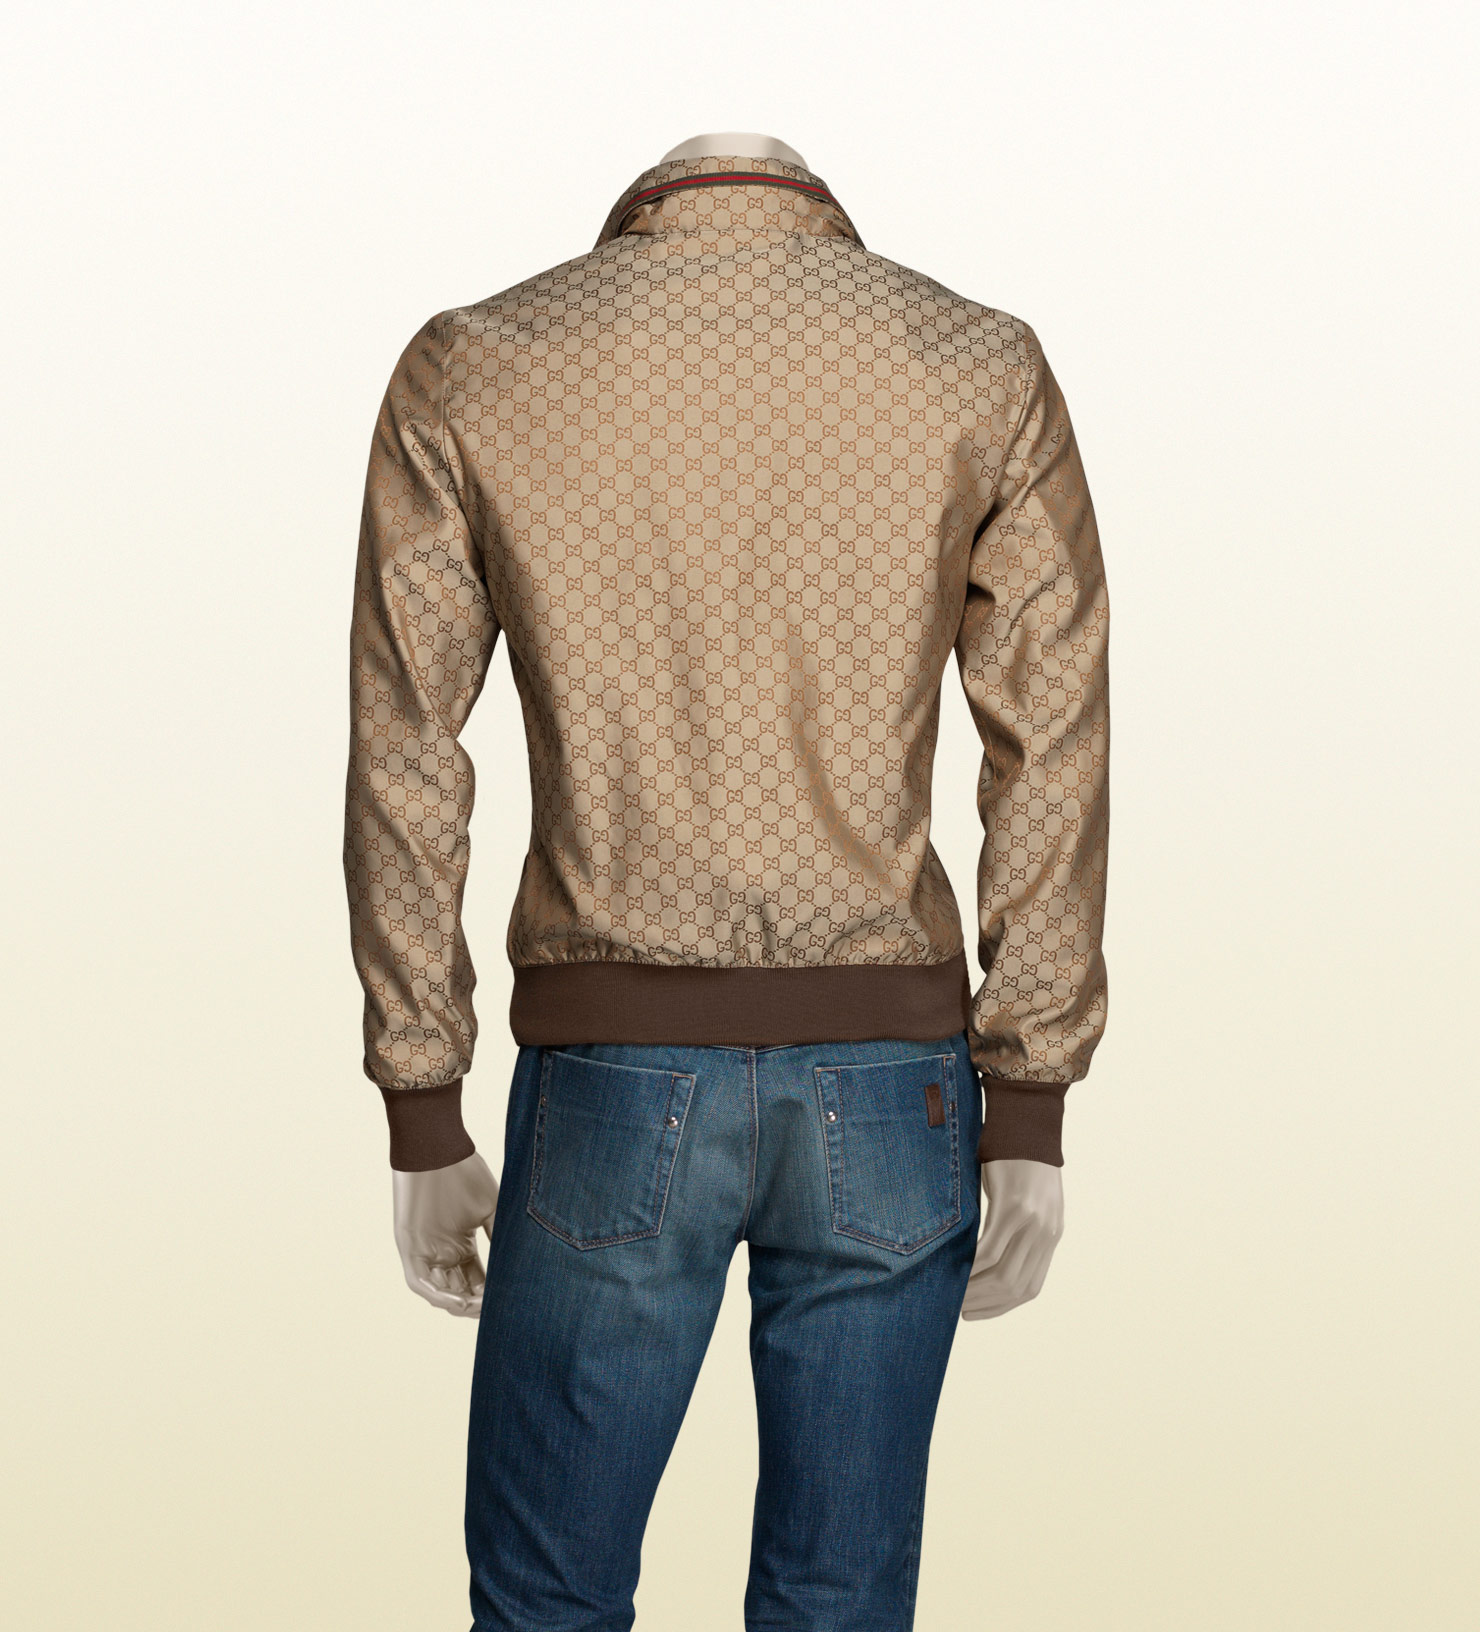 gucci khaki jacket, OFF 71%,www.amarkotarim.com.tr